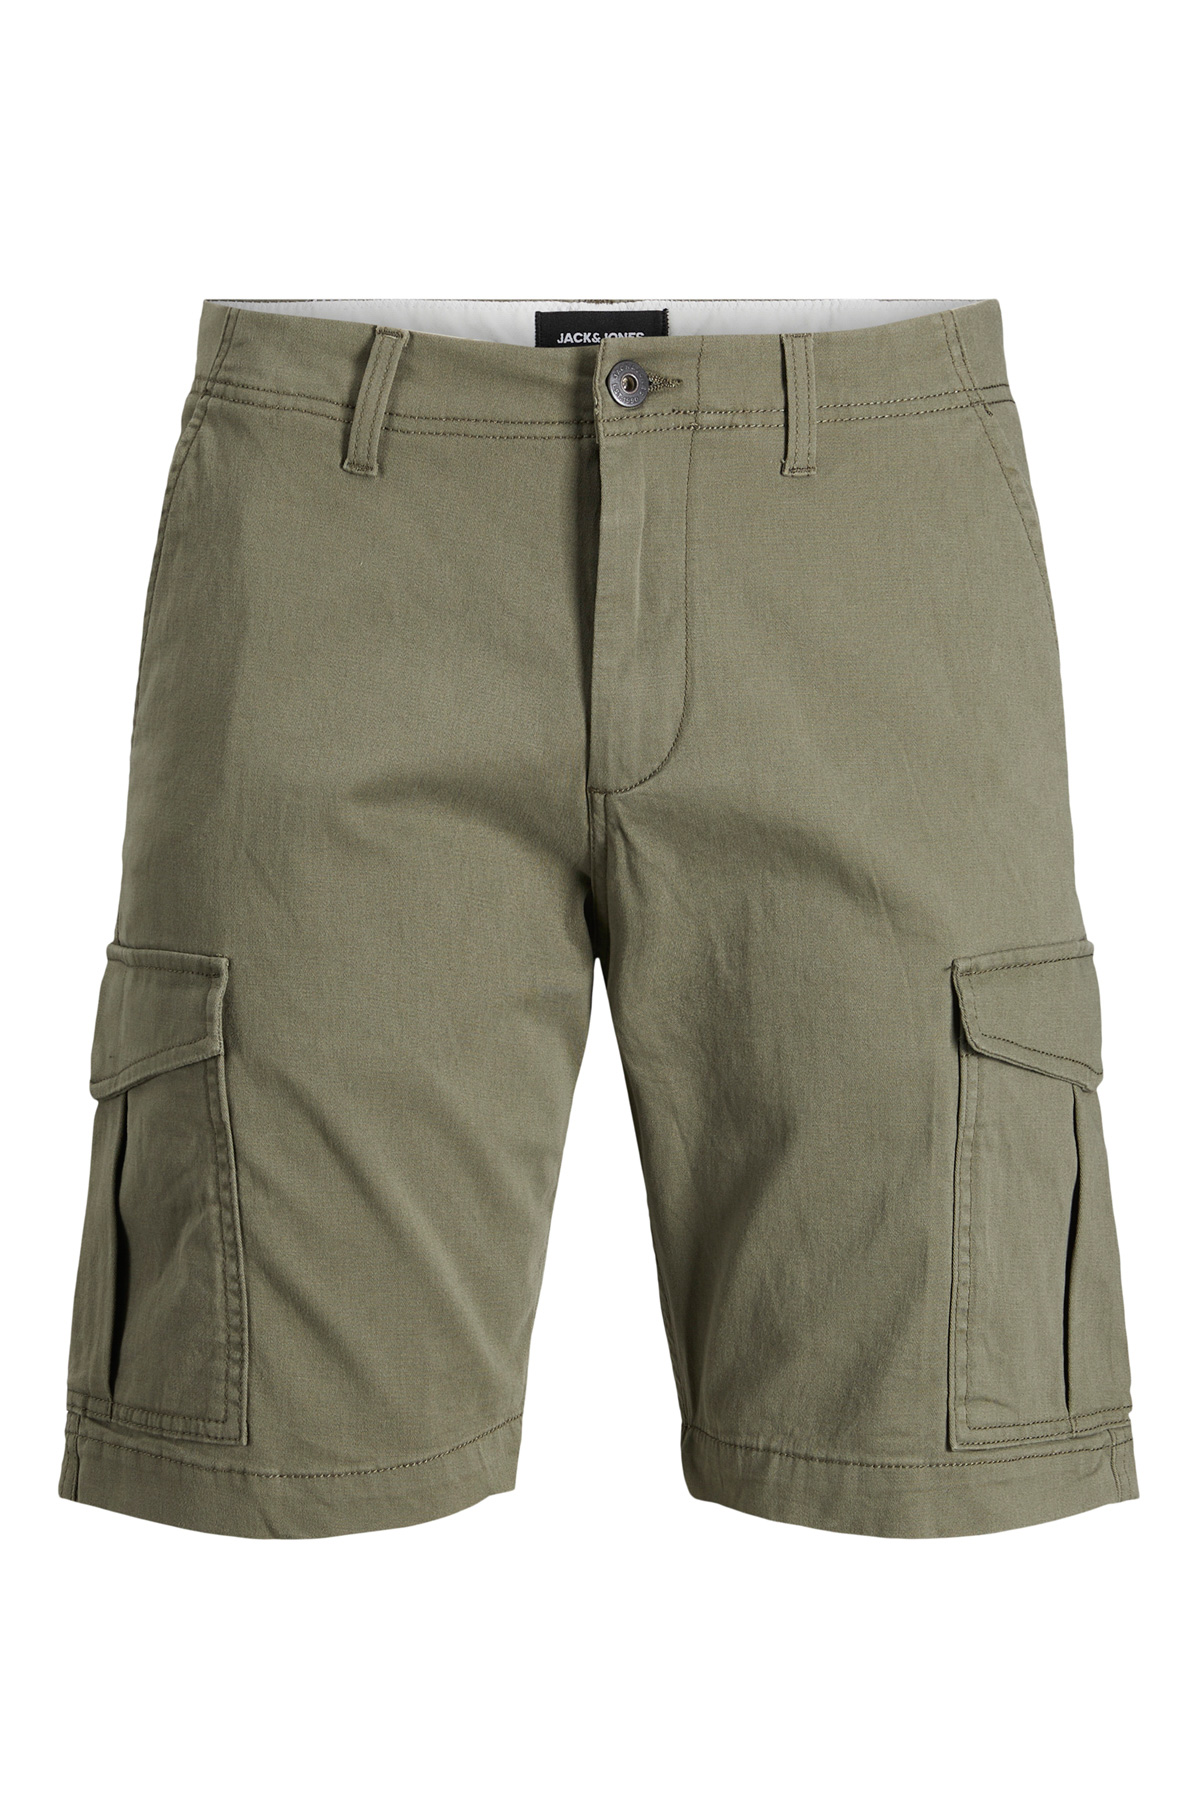 discount 76% Jack & Jones Jack & Jones shorts MEN FASHION Trousers Shorts Yellow M 